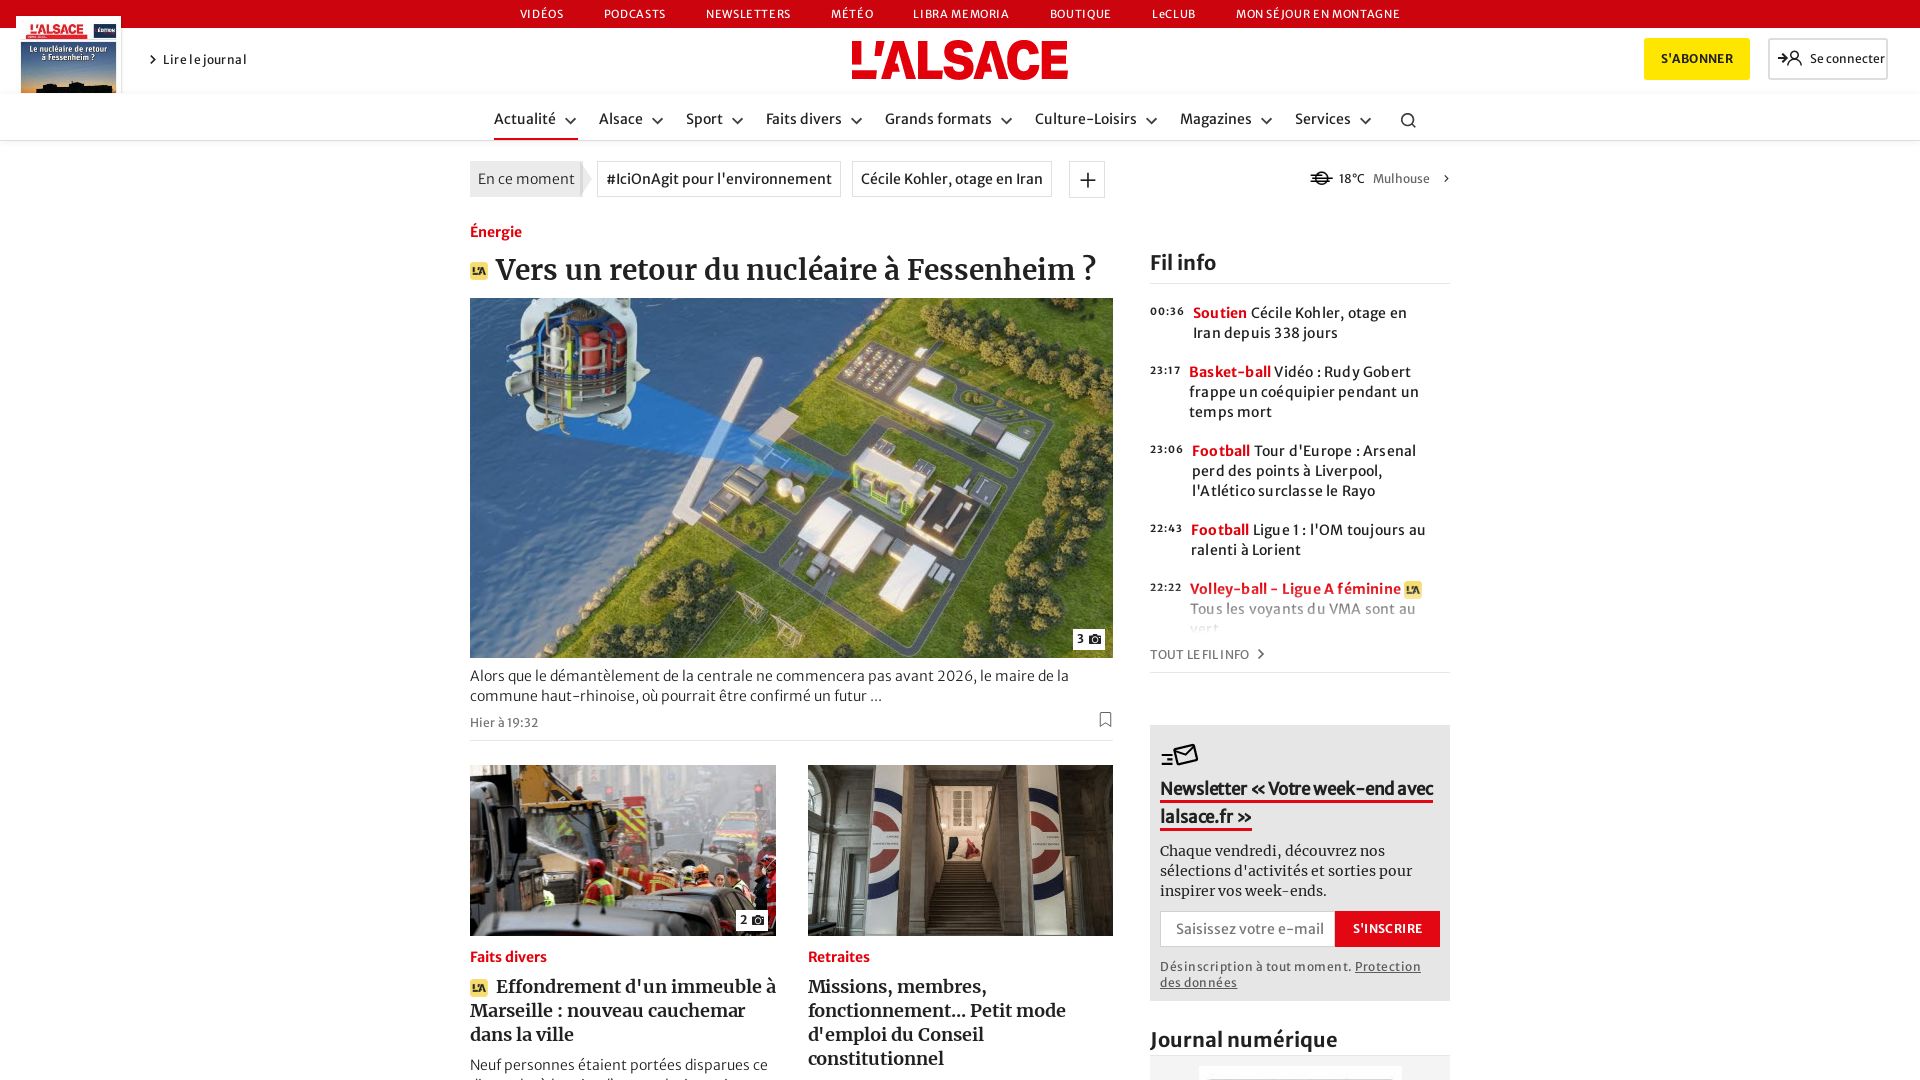 Website status lalsace.fr is   ONLINE